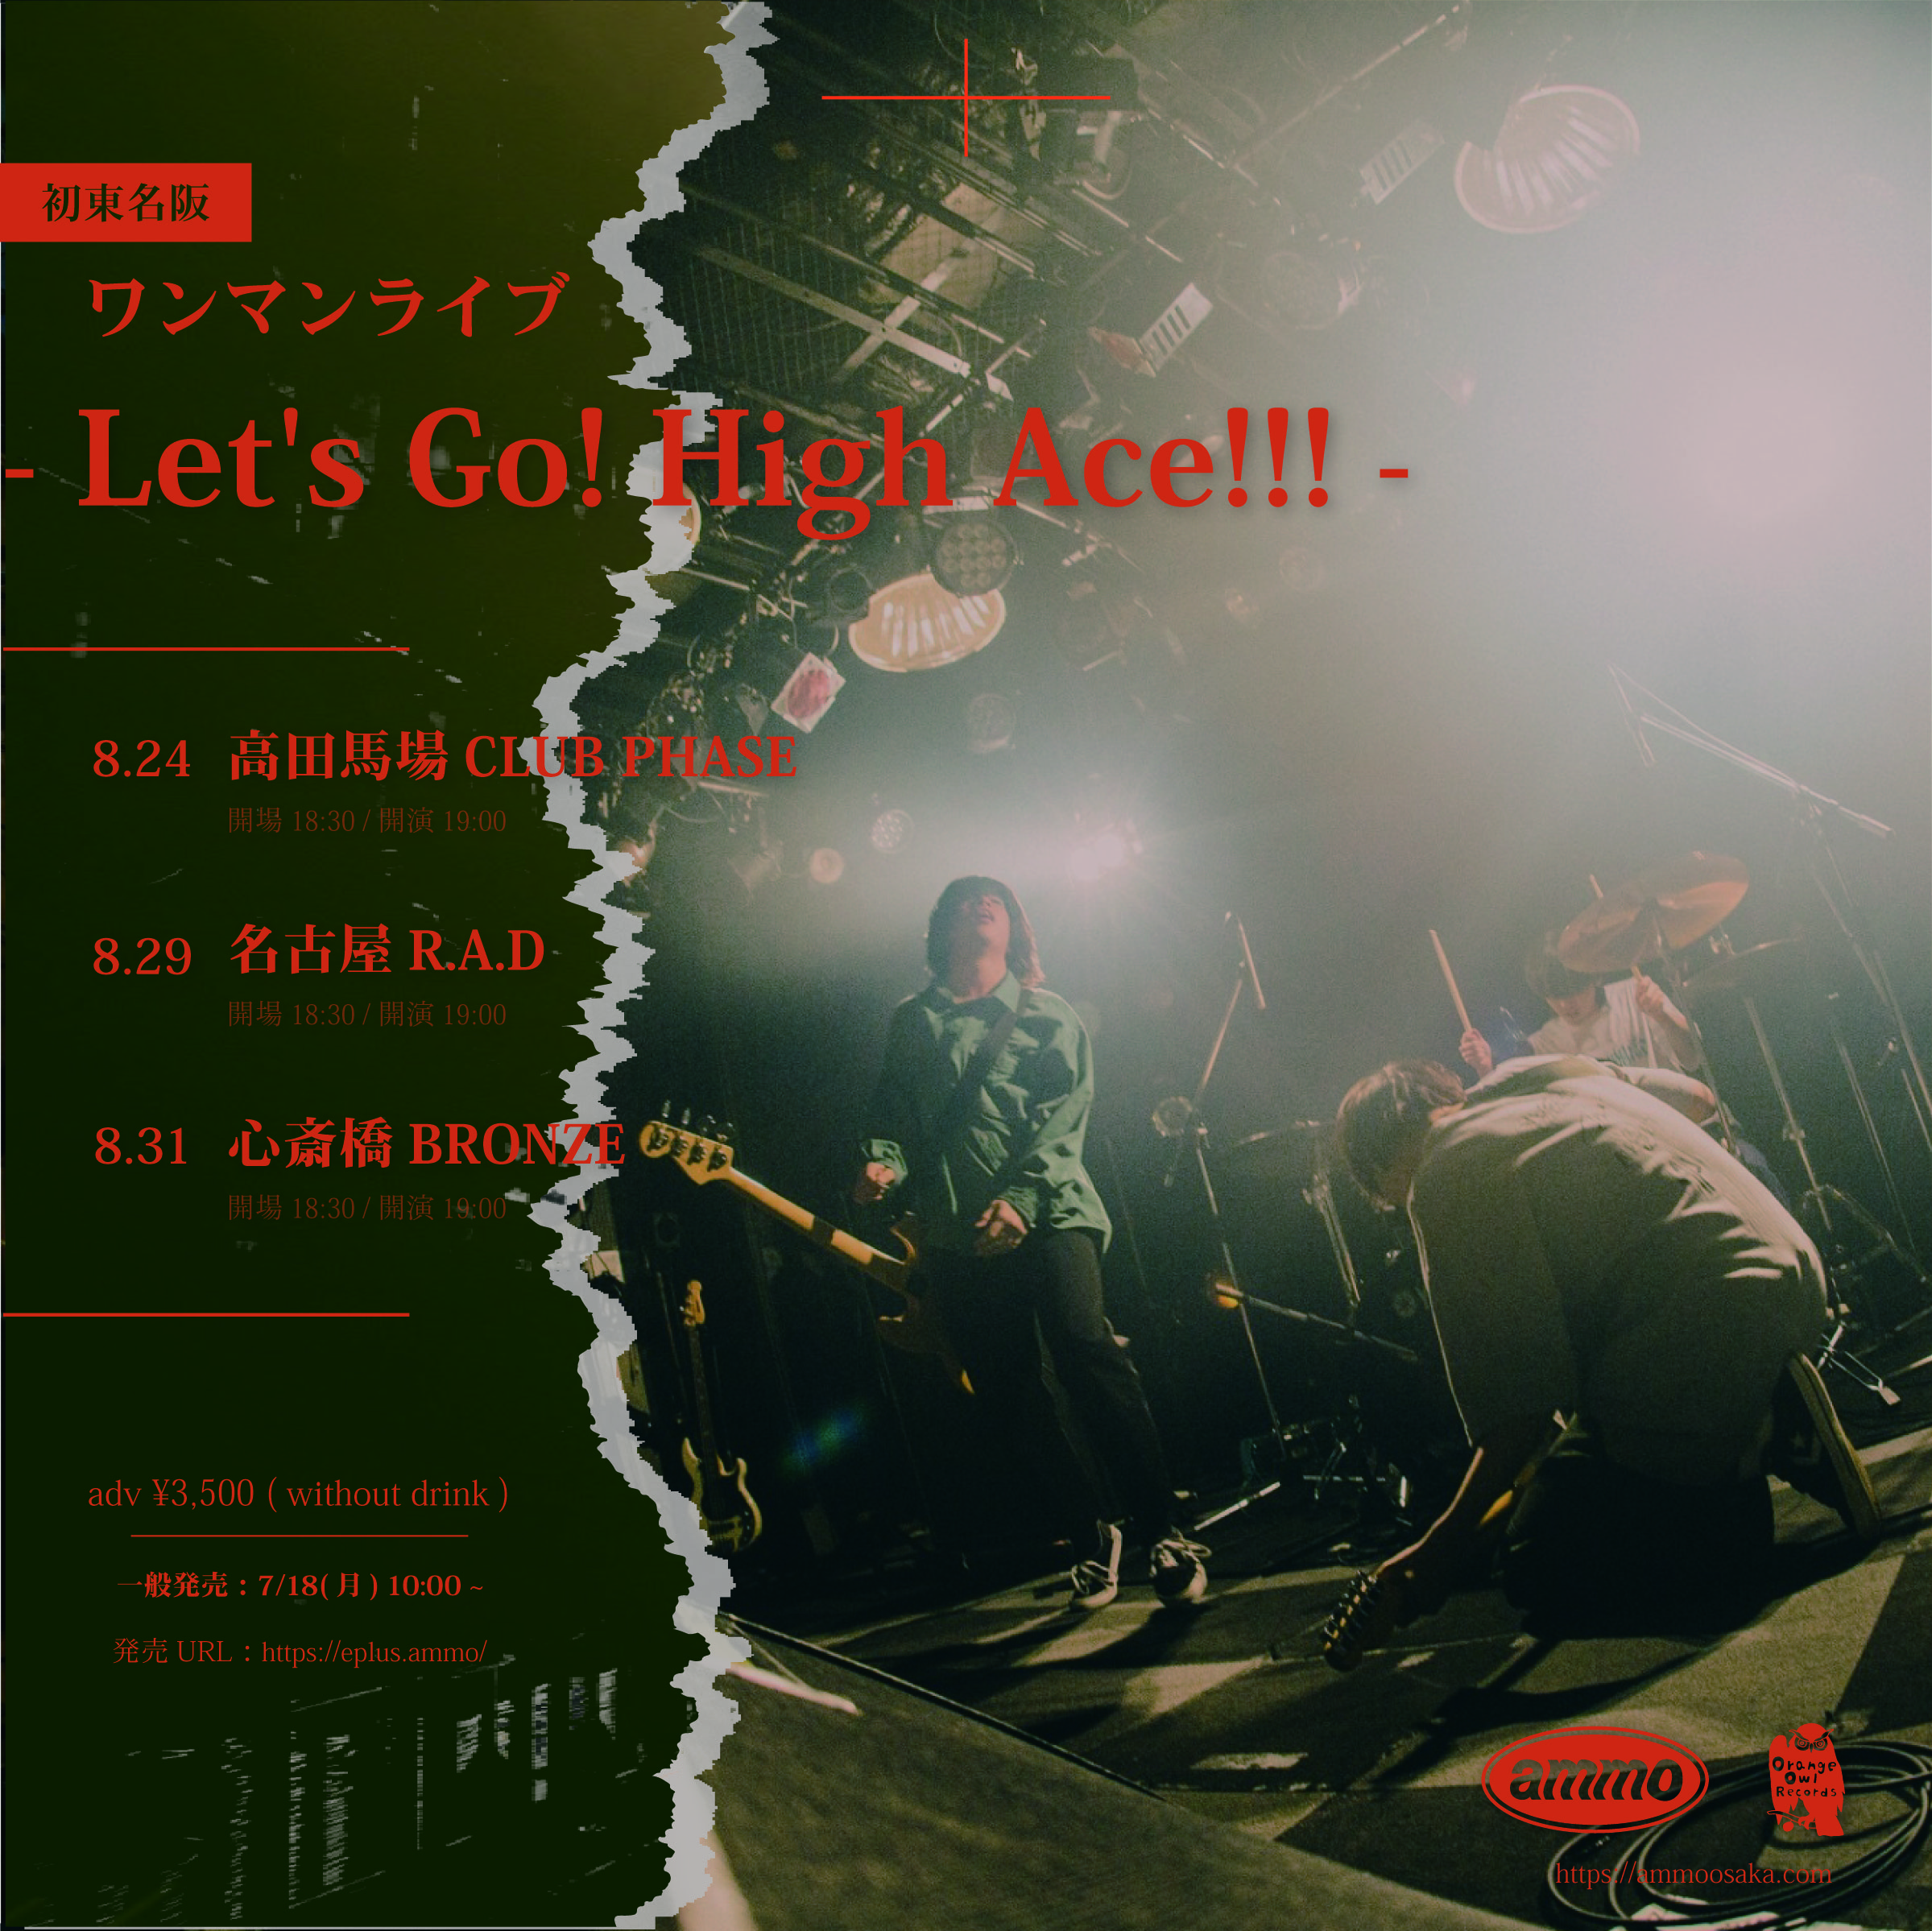 ammo初東名阪ワンマンライブ 「Let's Go! High Ace!!!」